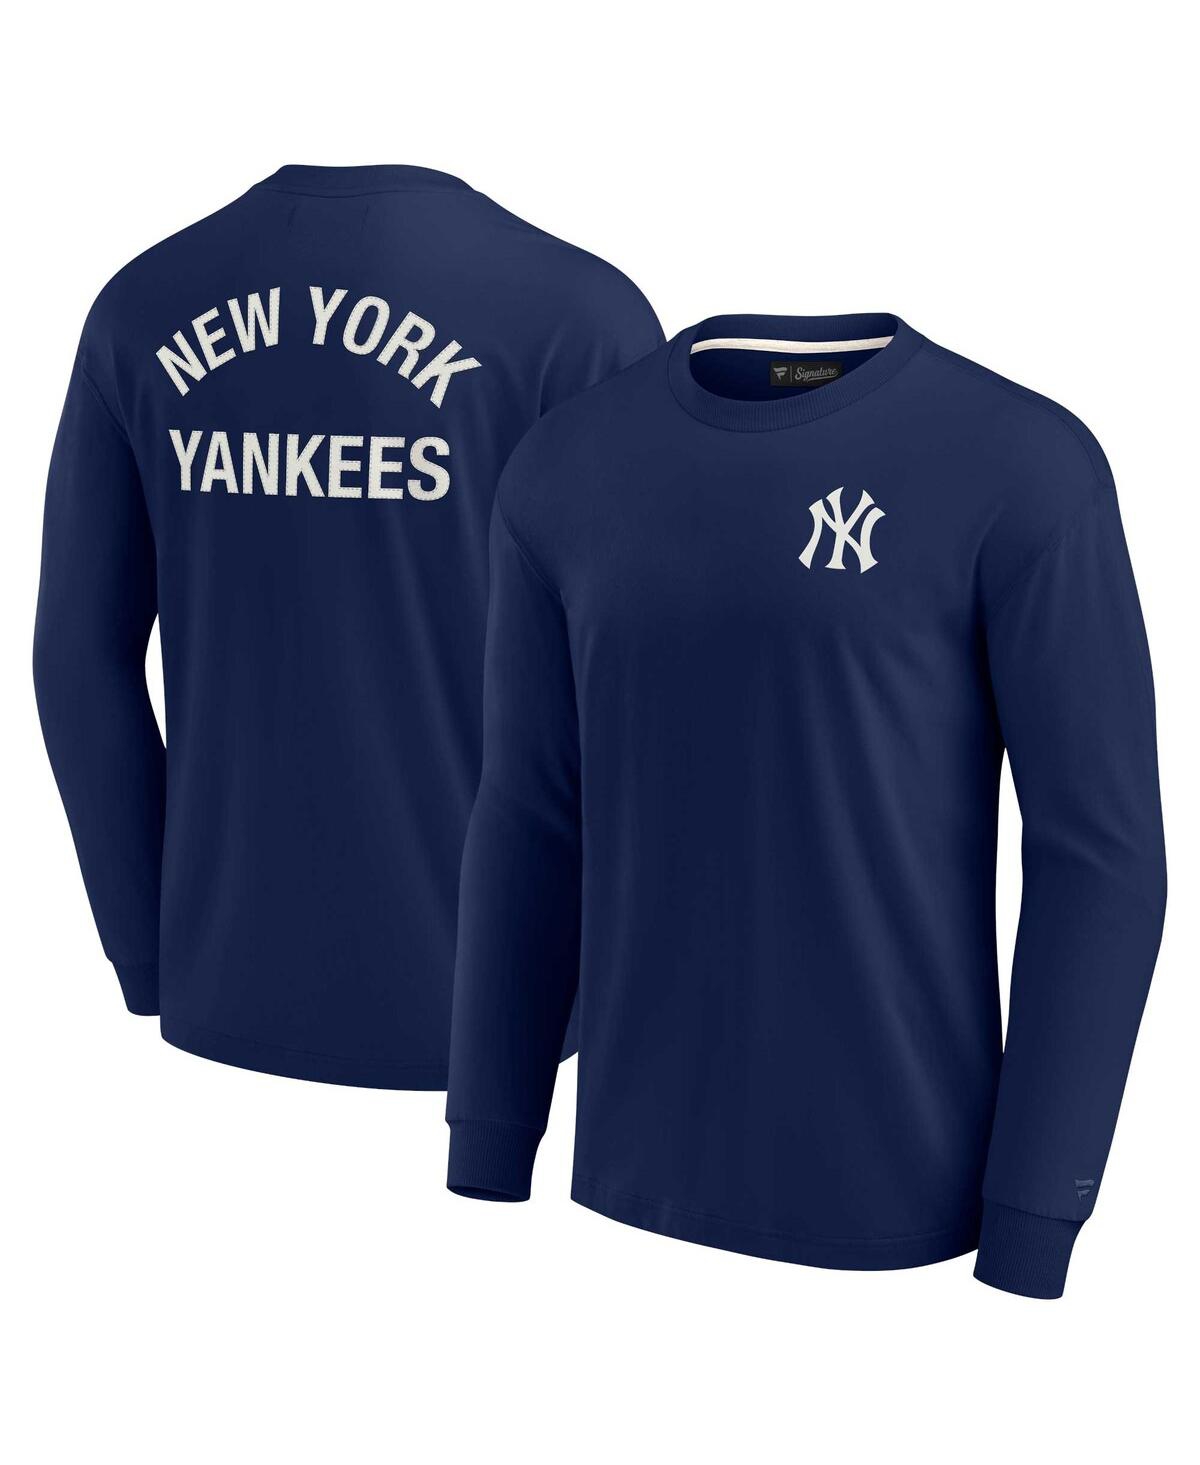 Fanatics Signature Men's And Women's  Navy New York Yankees Super Soft Long Sleeve T-shirt